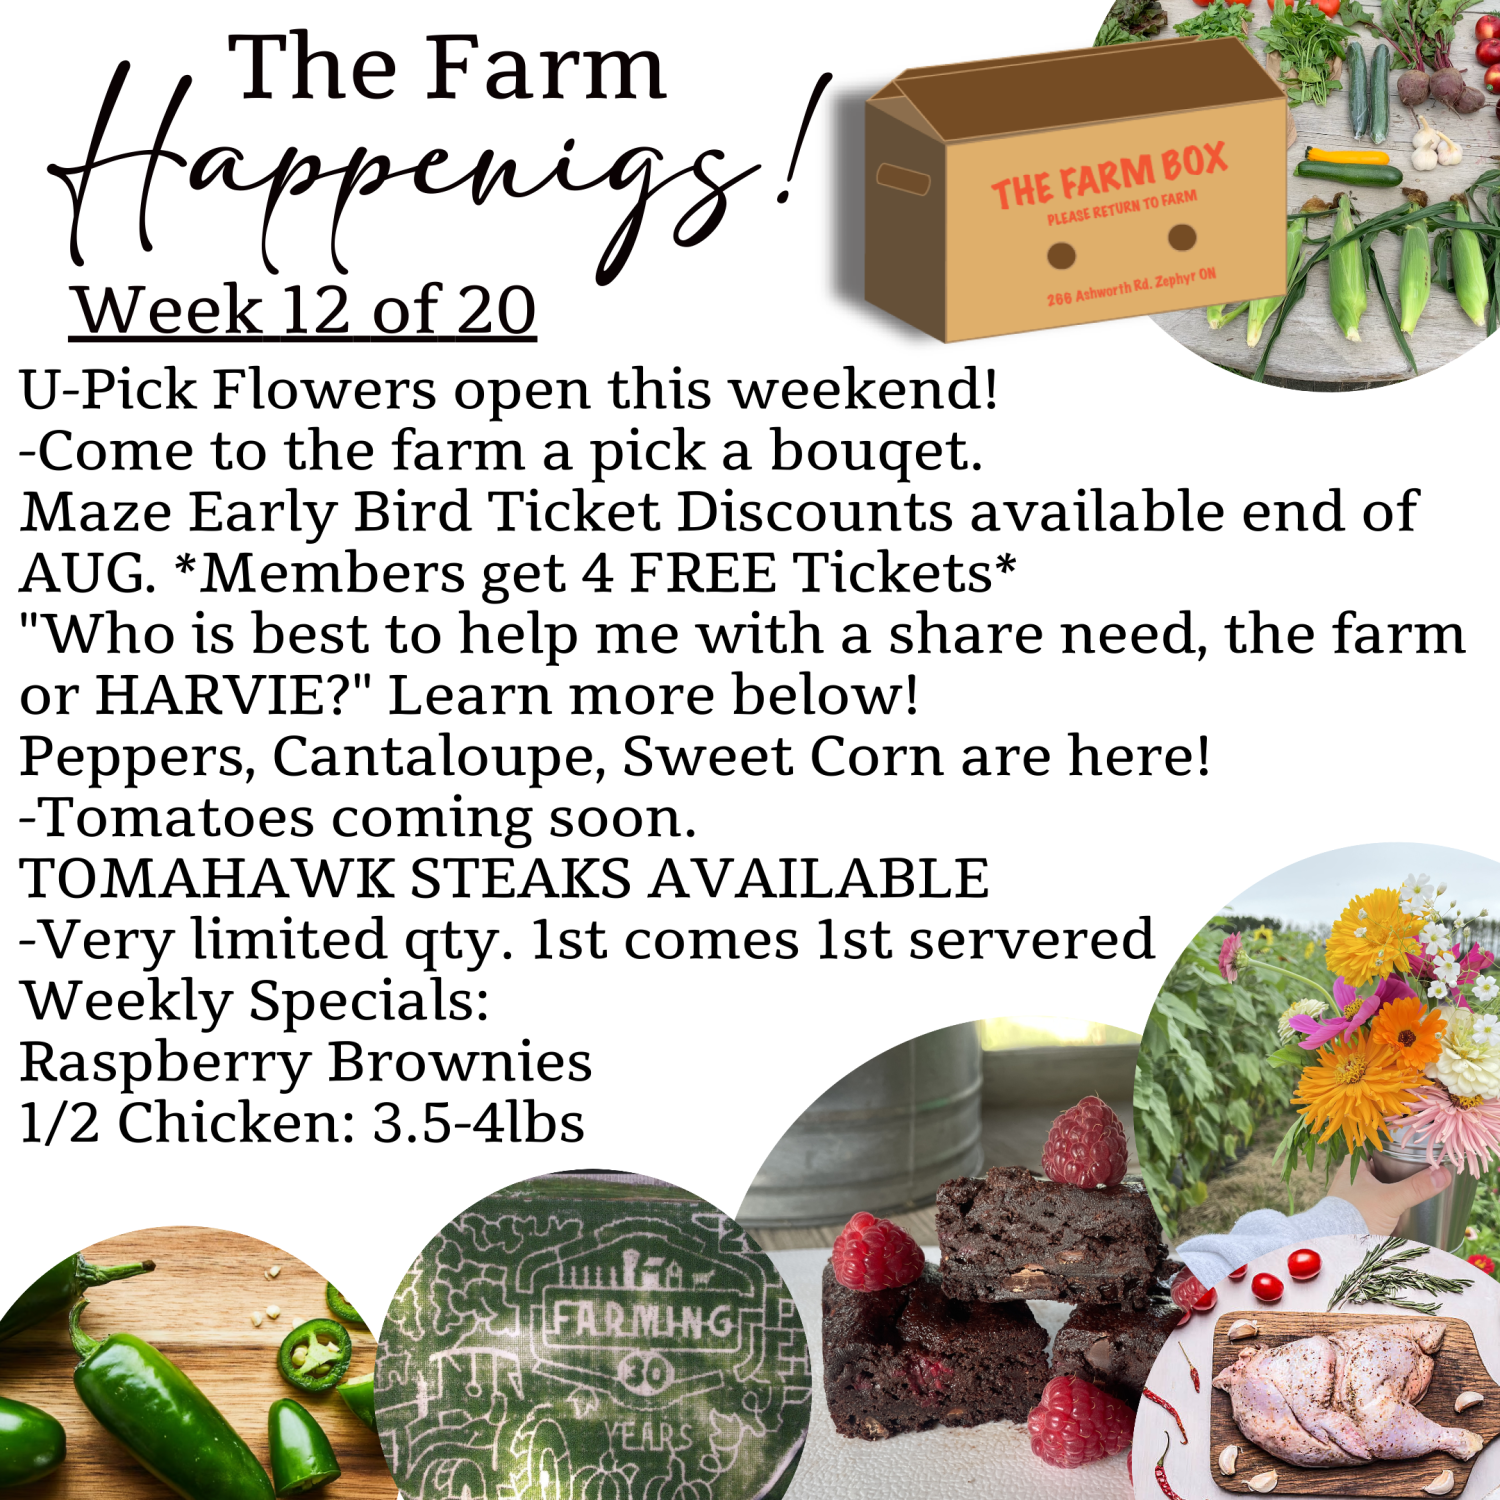 Previous Happening: "The Farm Box"-Coopers CSA Farm Farm Happenings Week 12